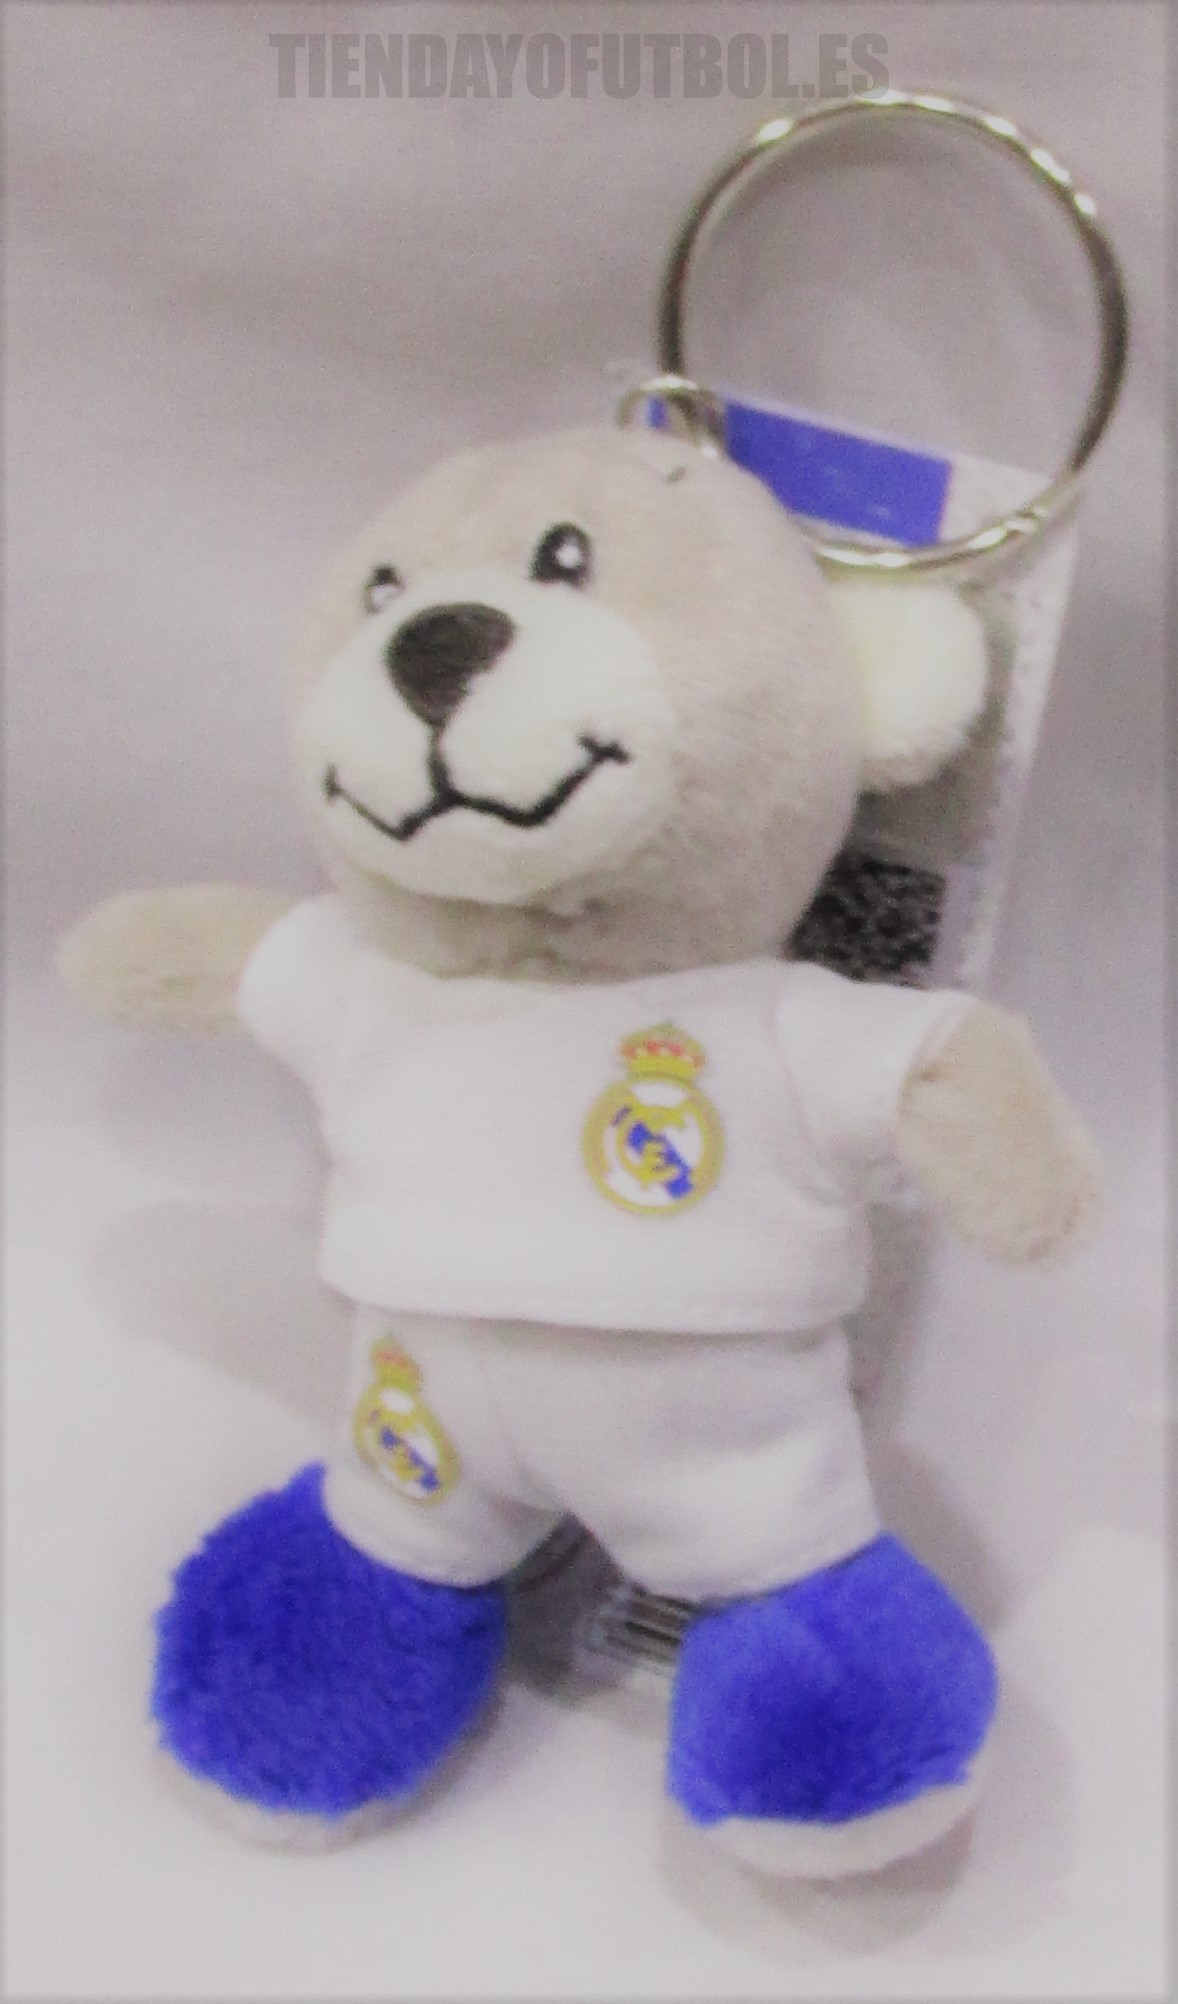 Real Madrid Teddy Bear